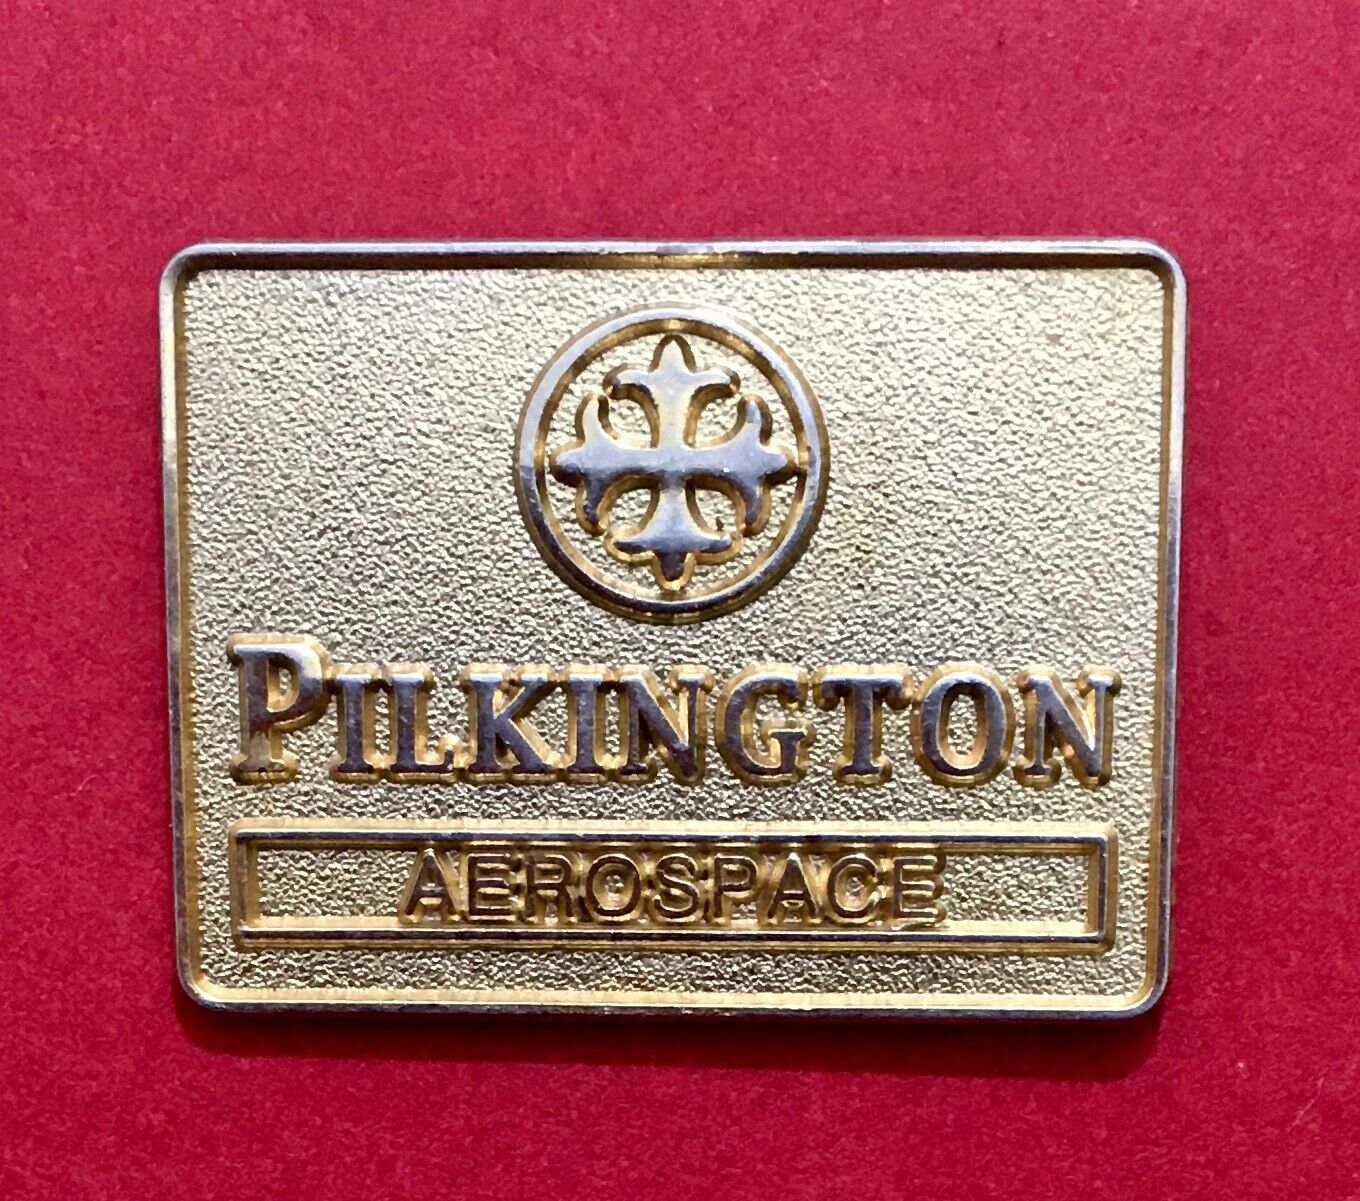 Pilkington Aerospace Vintage Pin Badge USA